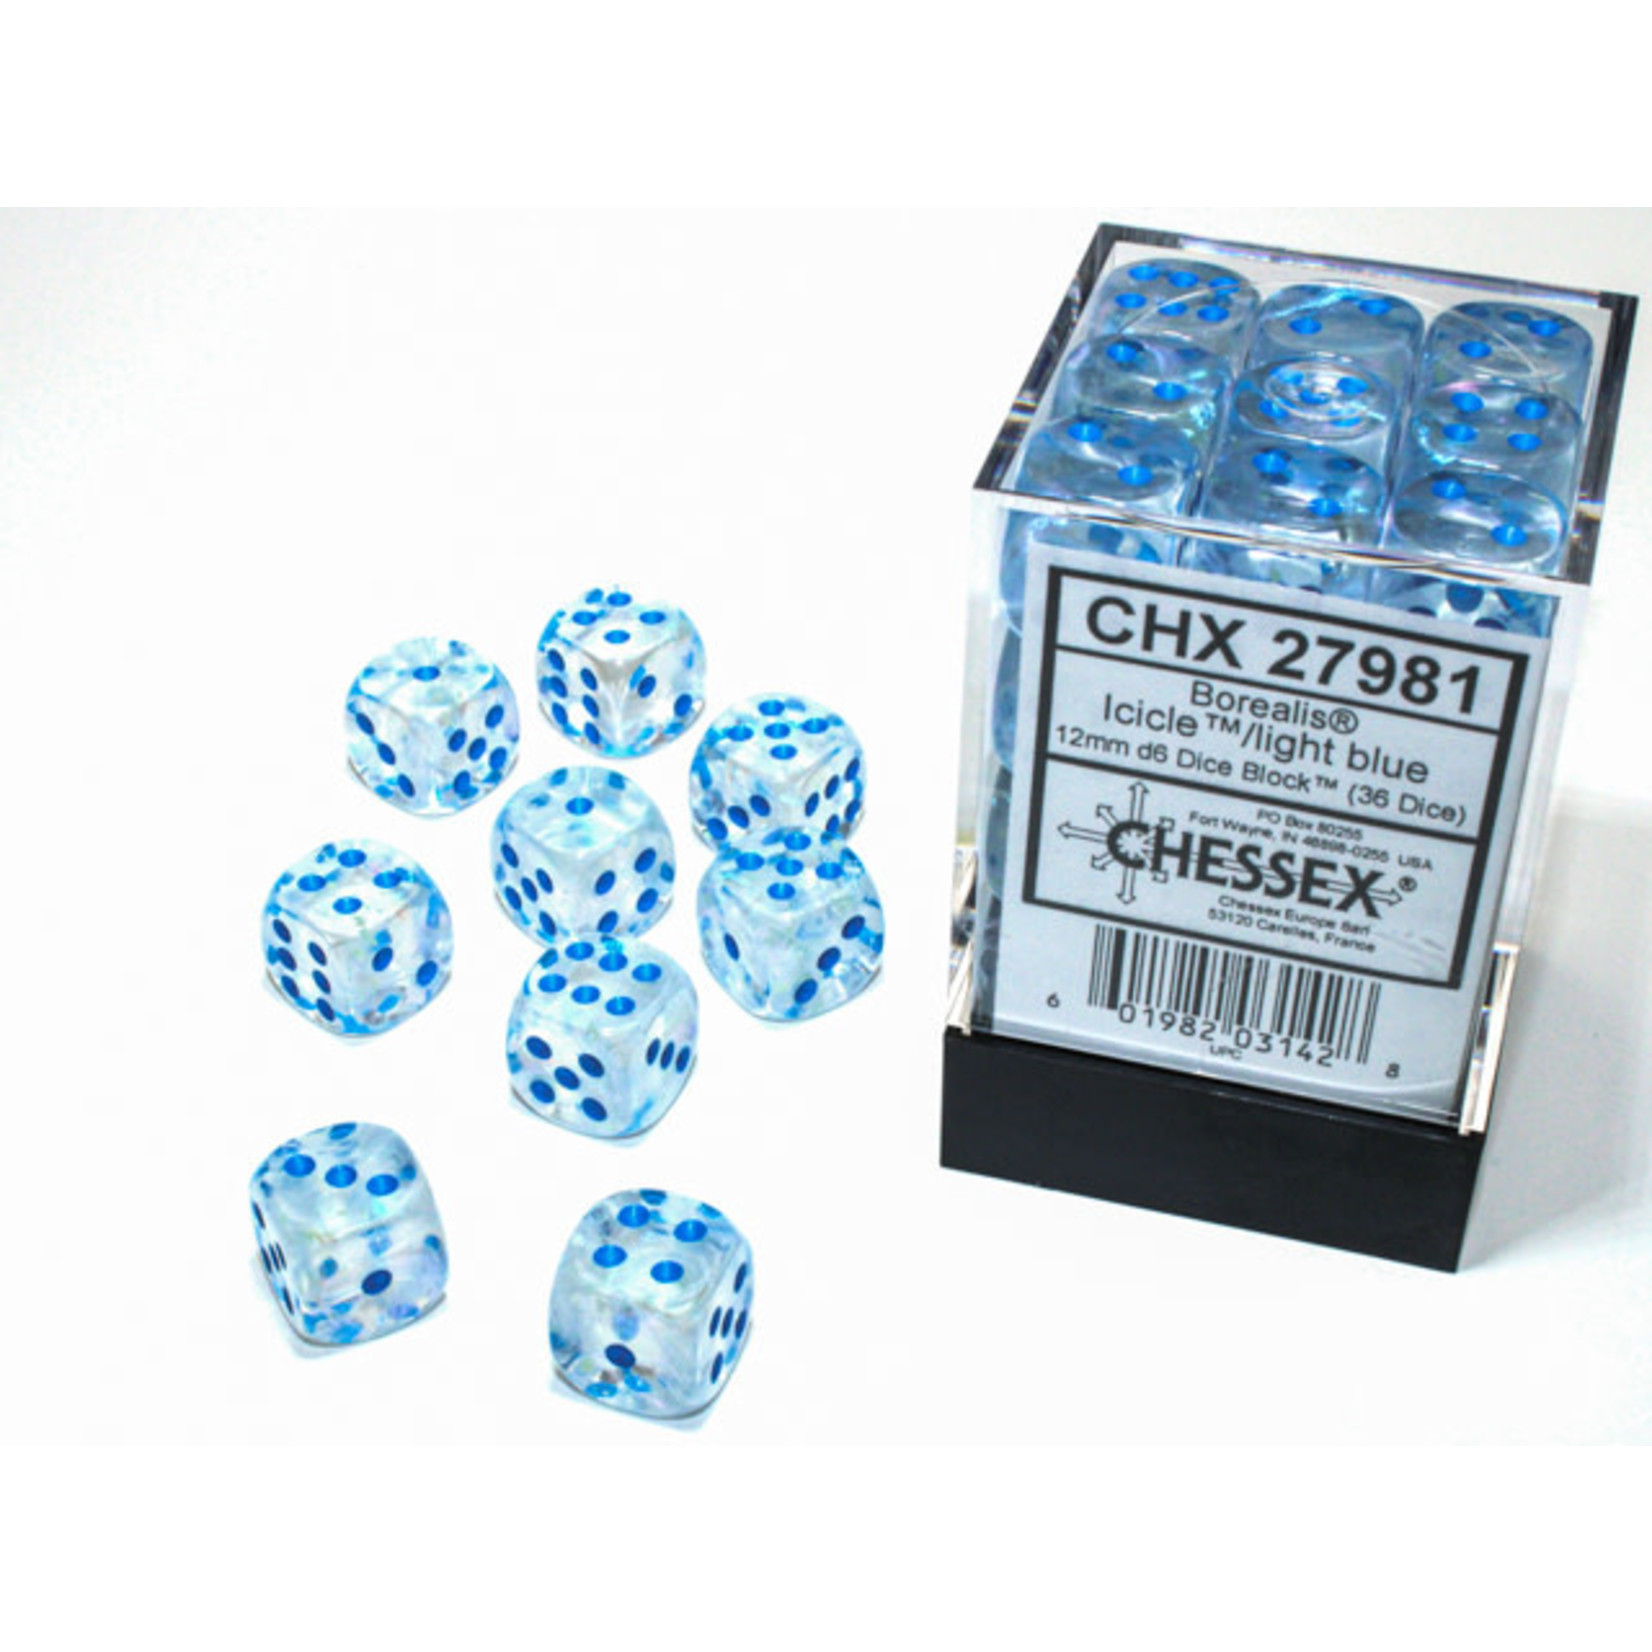 Chessex Borealis: 12mm d6 Icicle/light blue Luminary Dice (36)